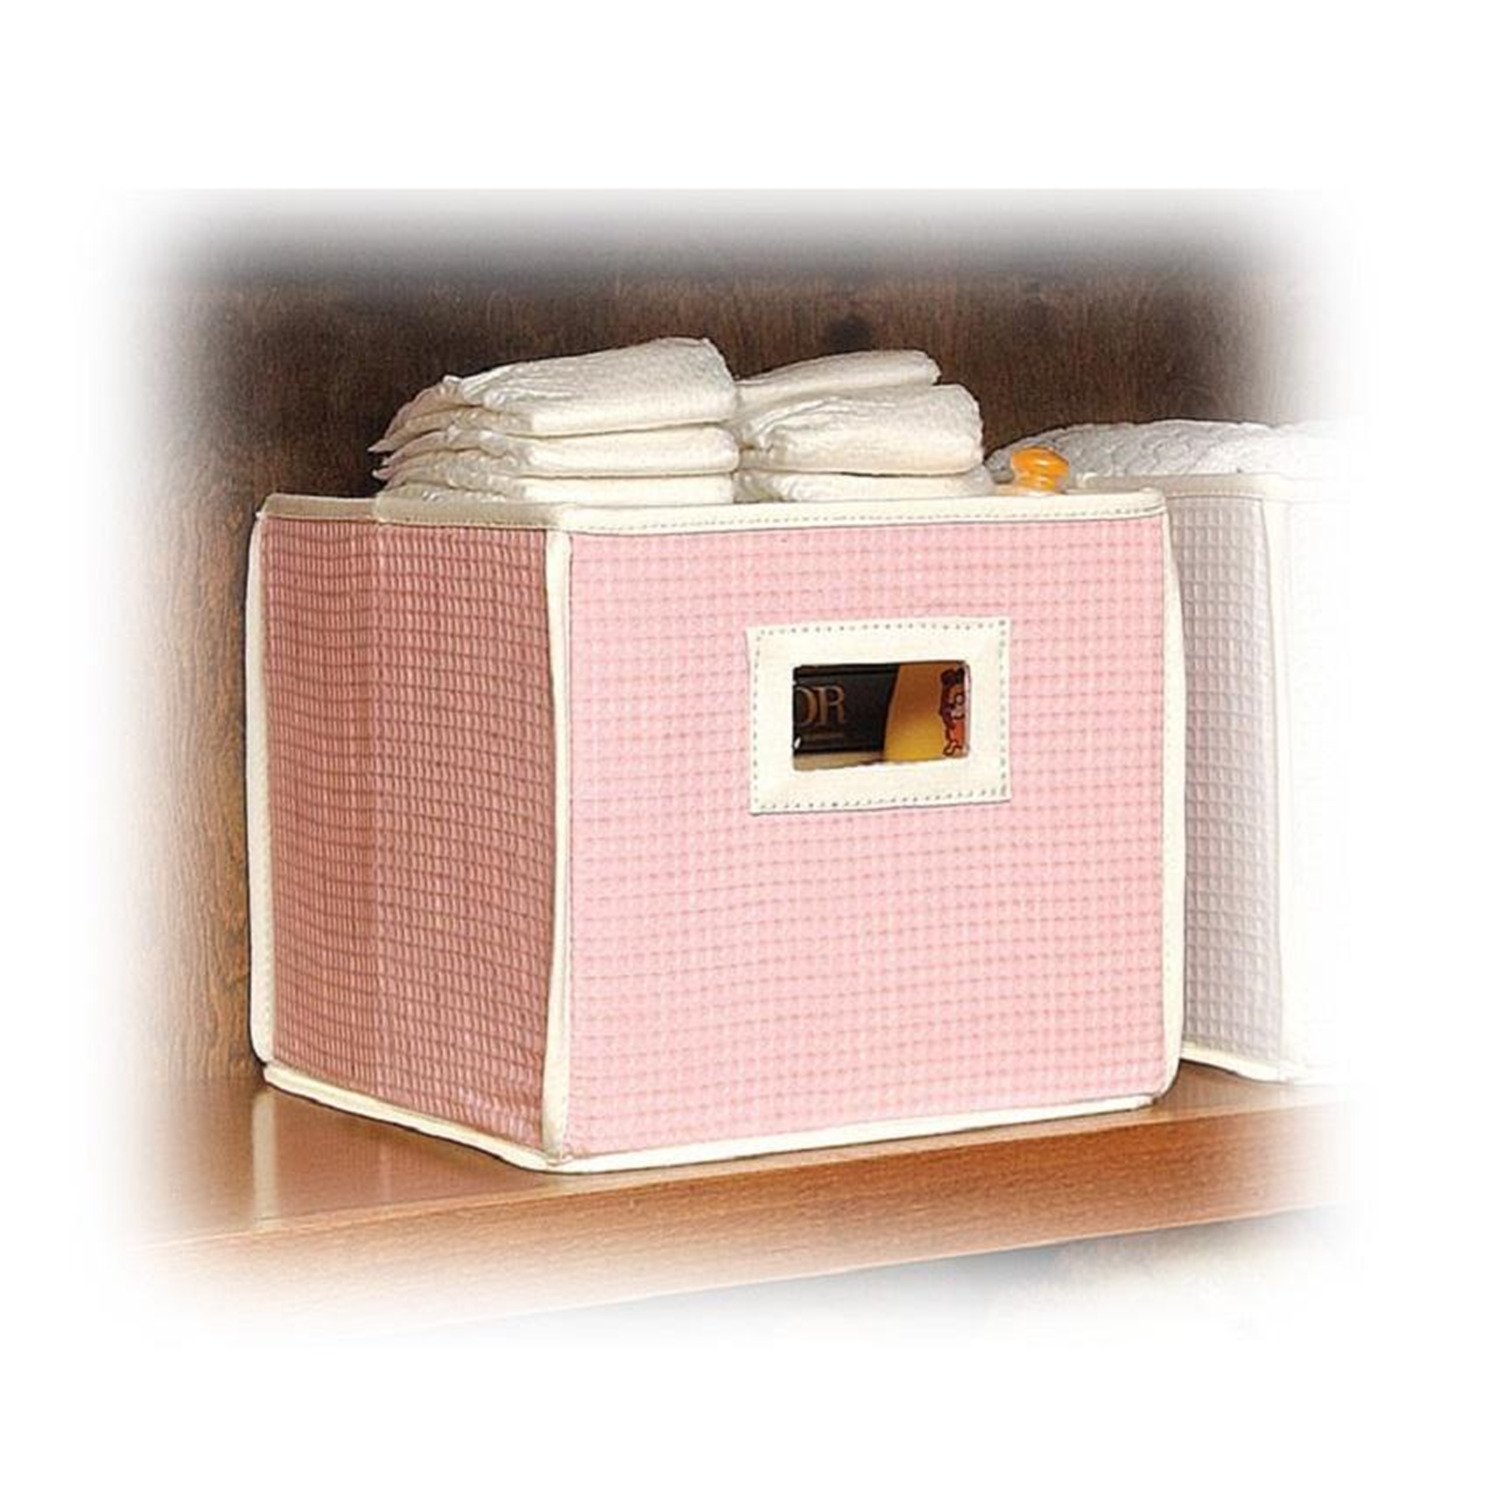 Folding Nursery Basket/Storage Cube-Fabric:Brown Polka Dot - image 4 of 8